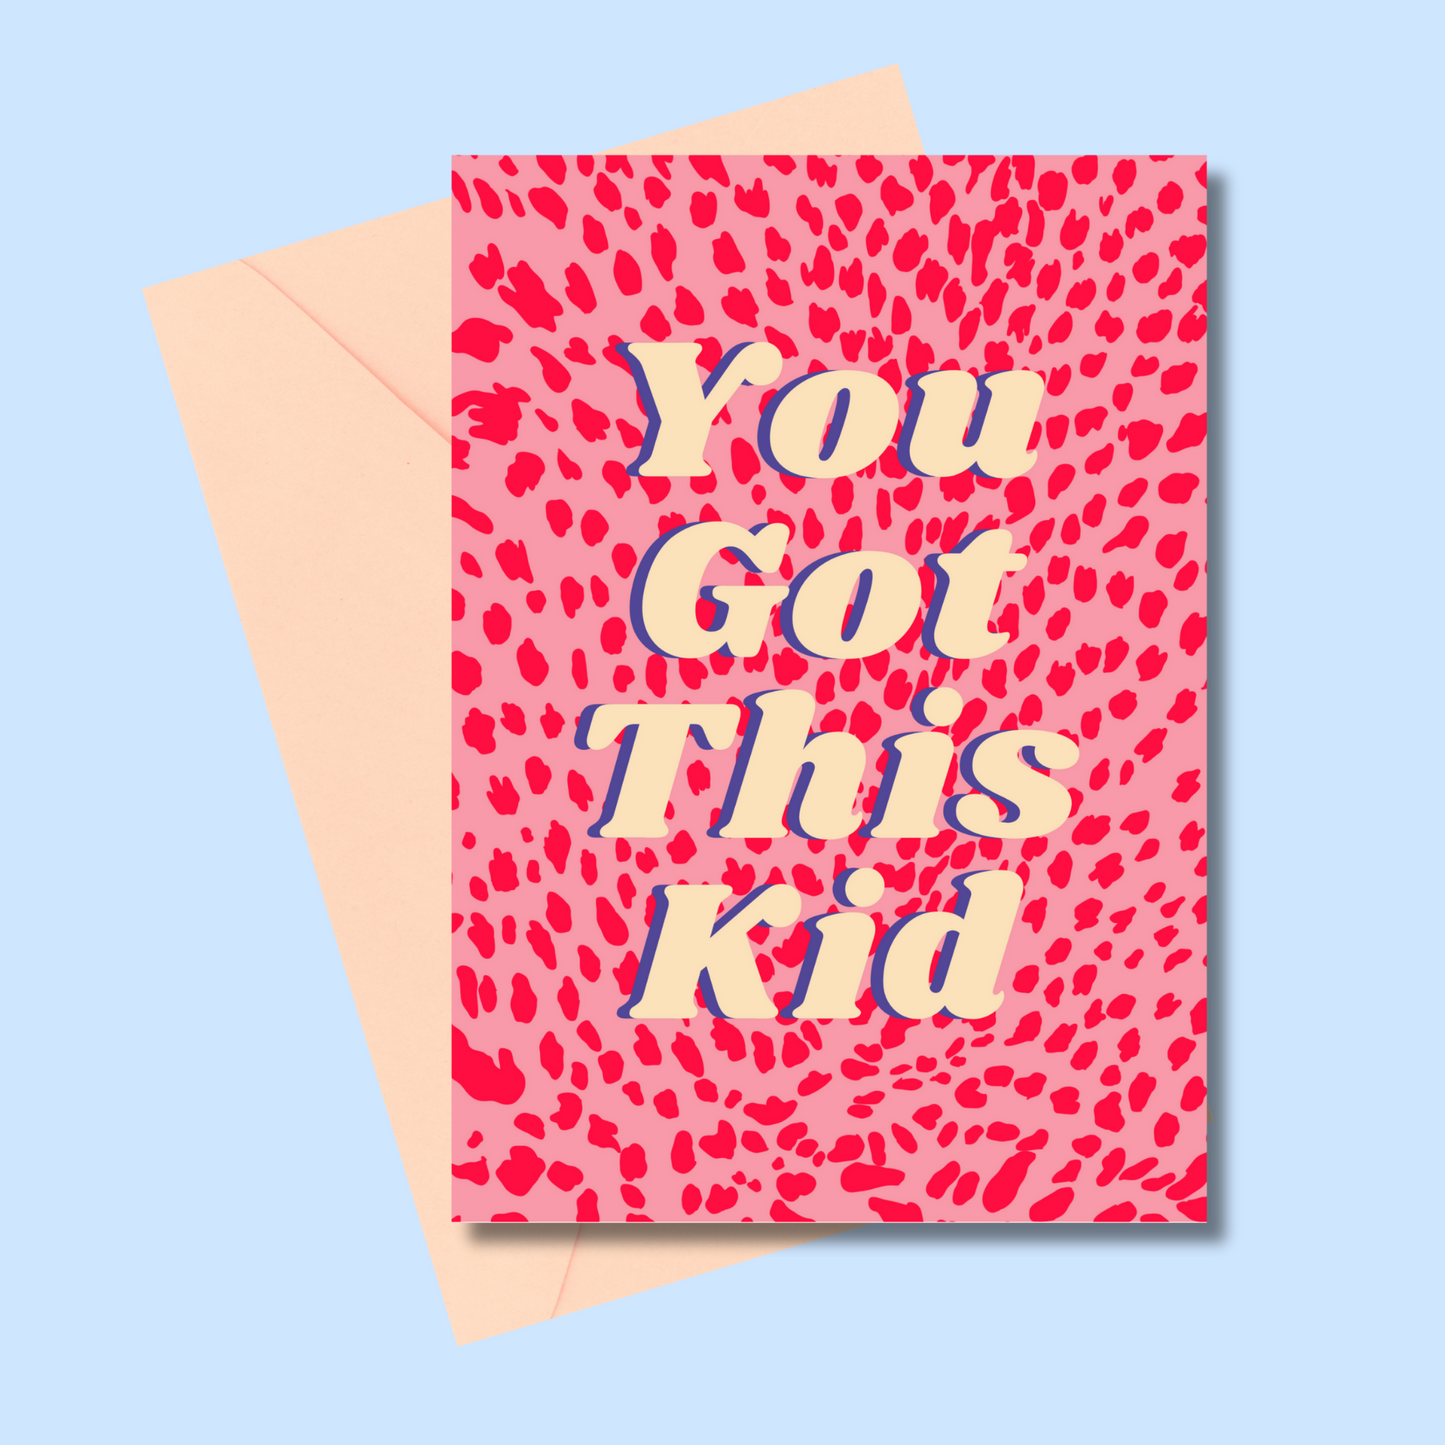 You got this kid (5x7” print/card)